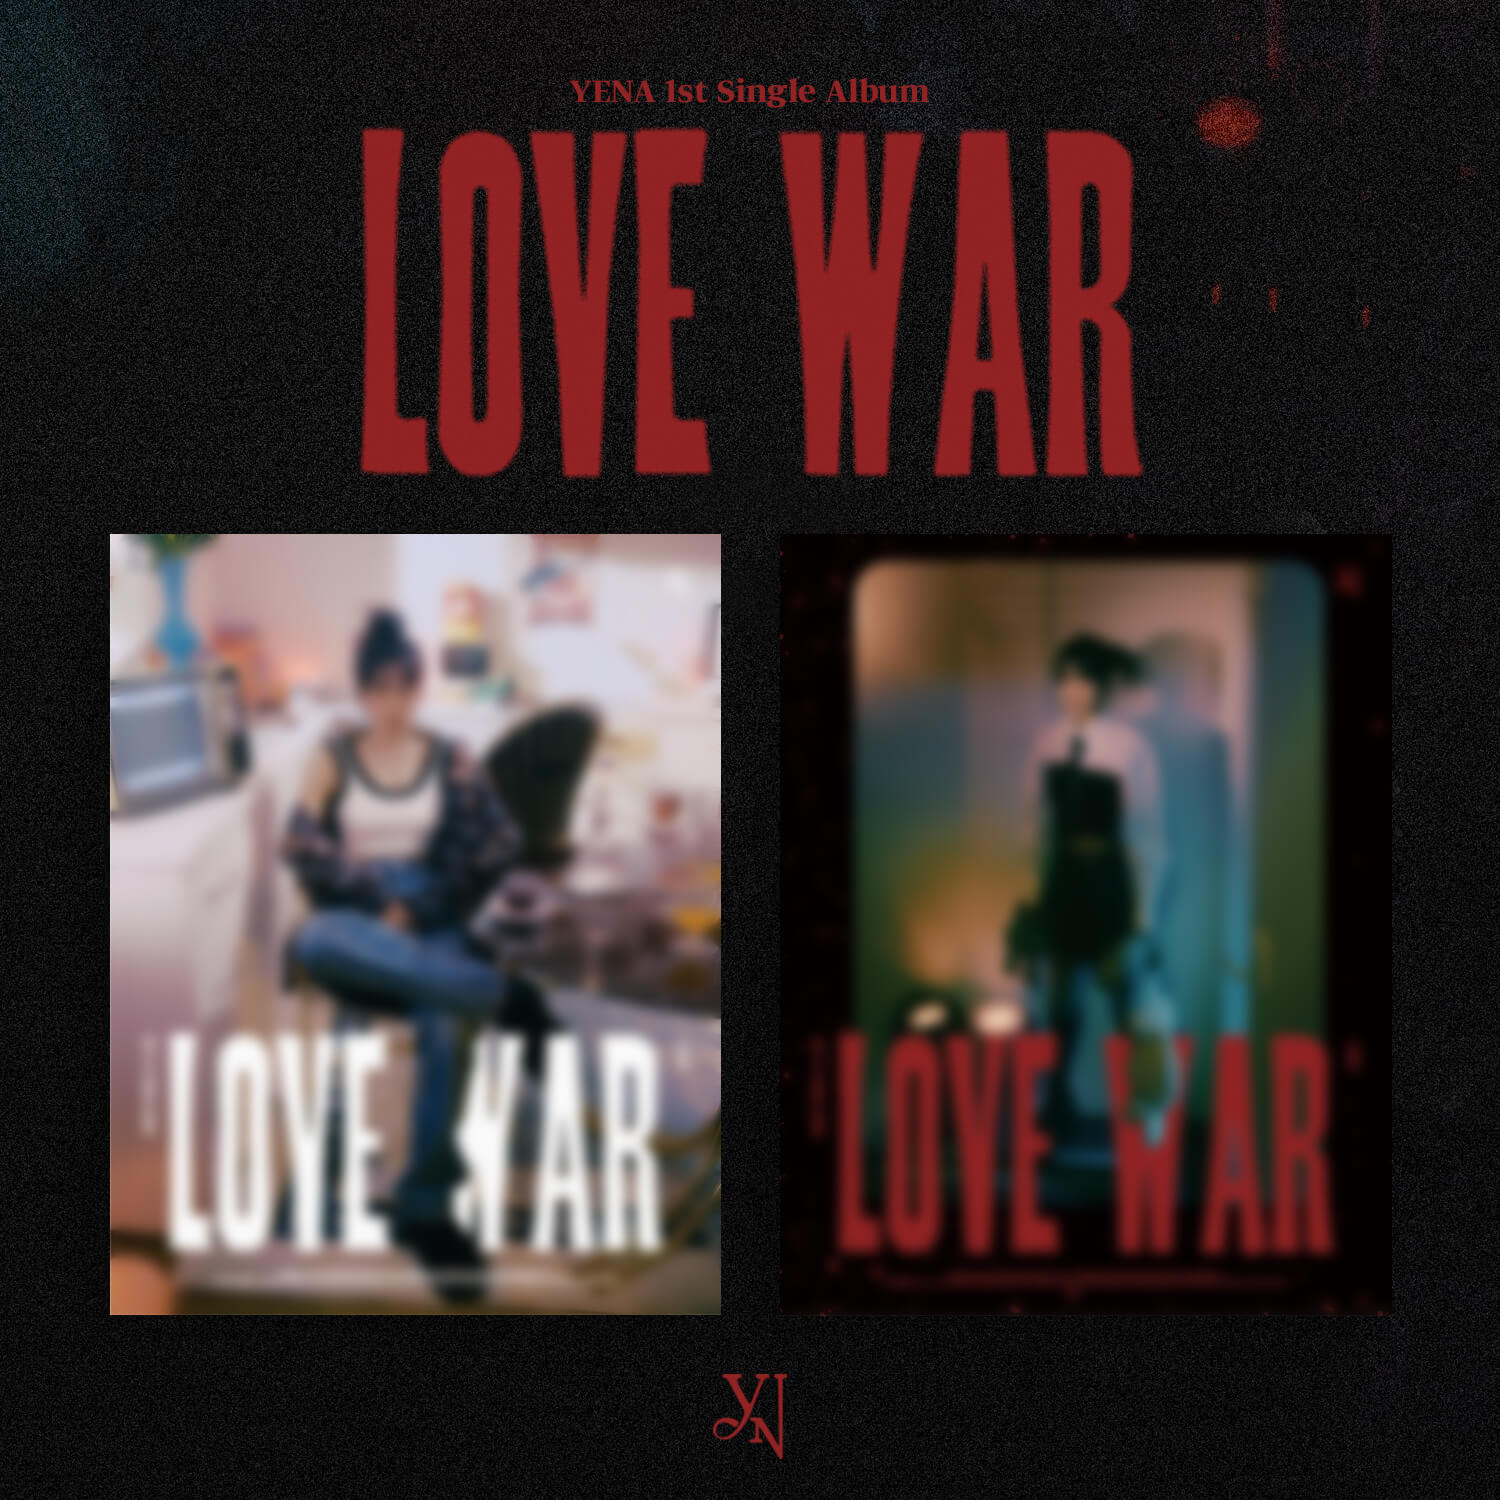 Yena 1st Single Album Love War - Love / War Version